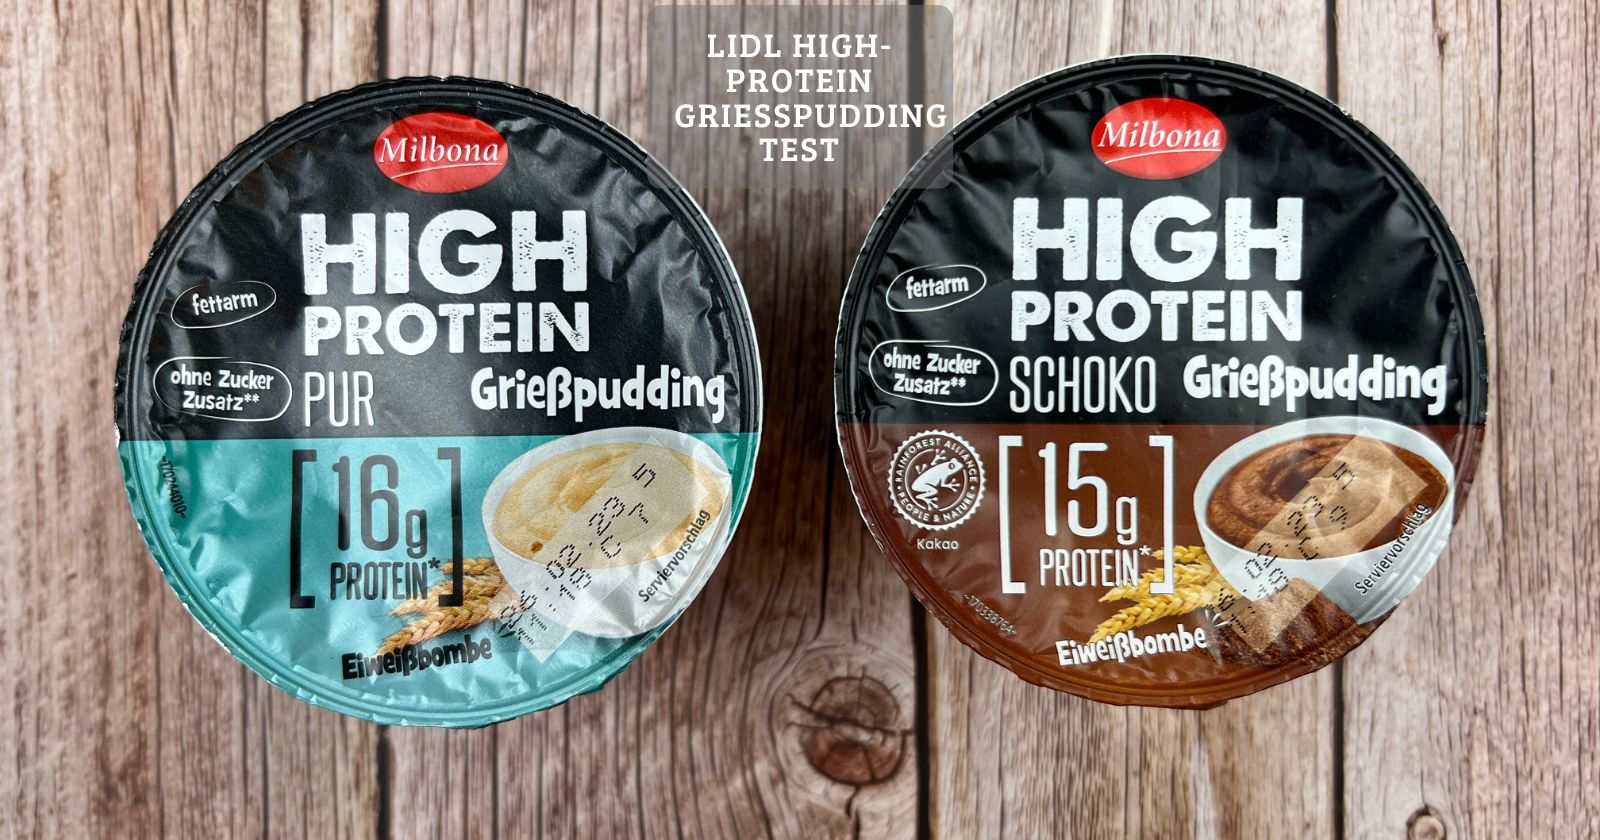 High-protein grießpudding lidl test